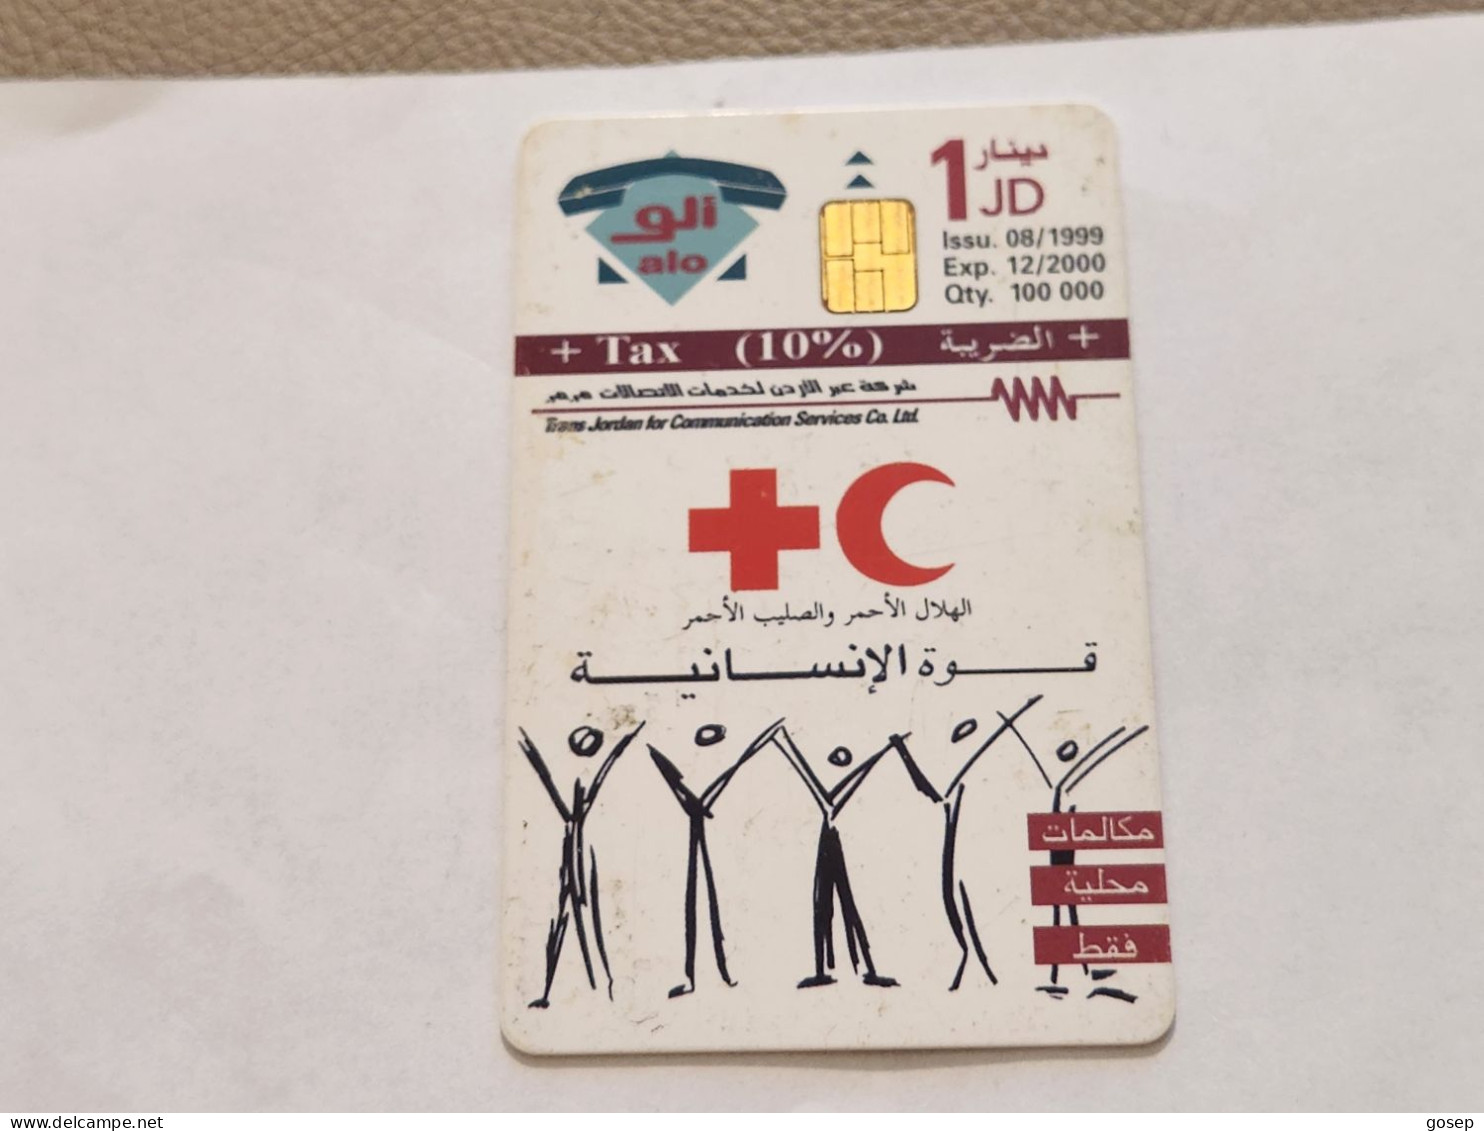 JORDAN-(JO-ALO-0056)-Red Cross-(176)-(1002-625125)-(1JD)-(12/2000)-used Card+1card Prepiad Free - Jordan